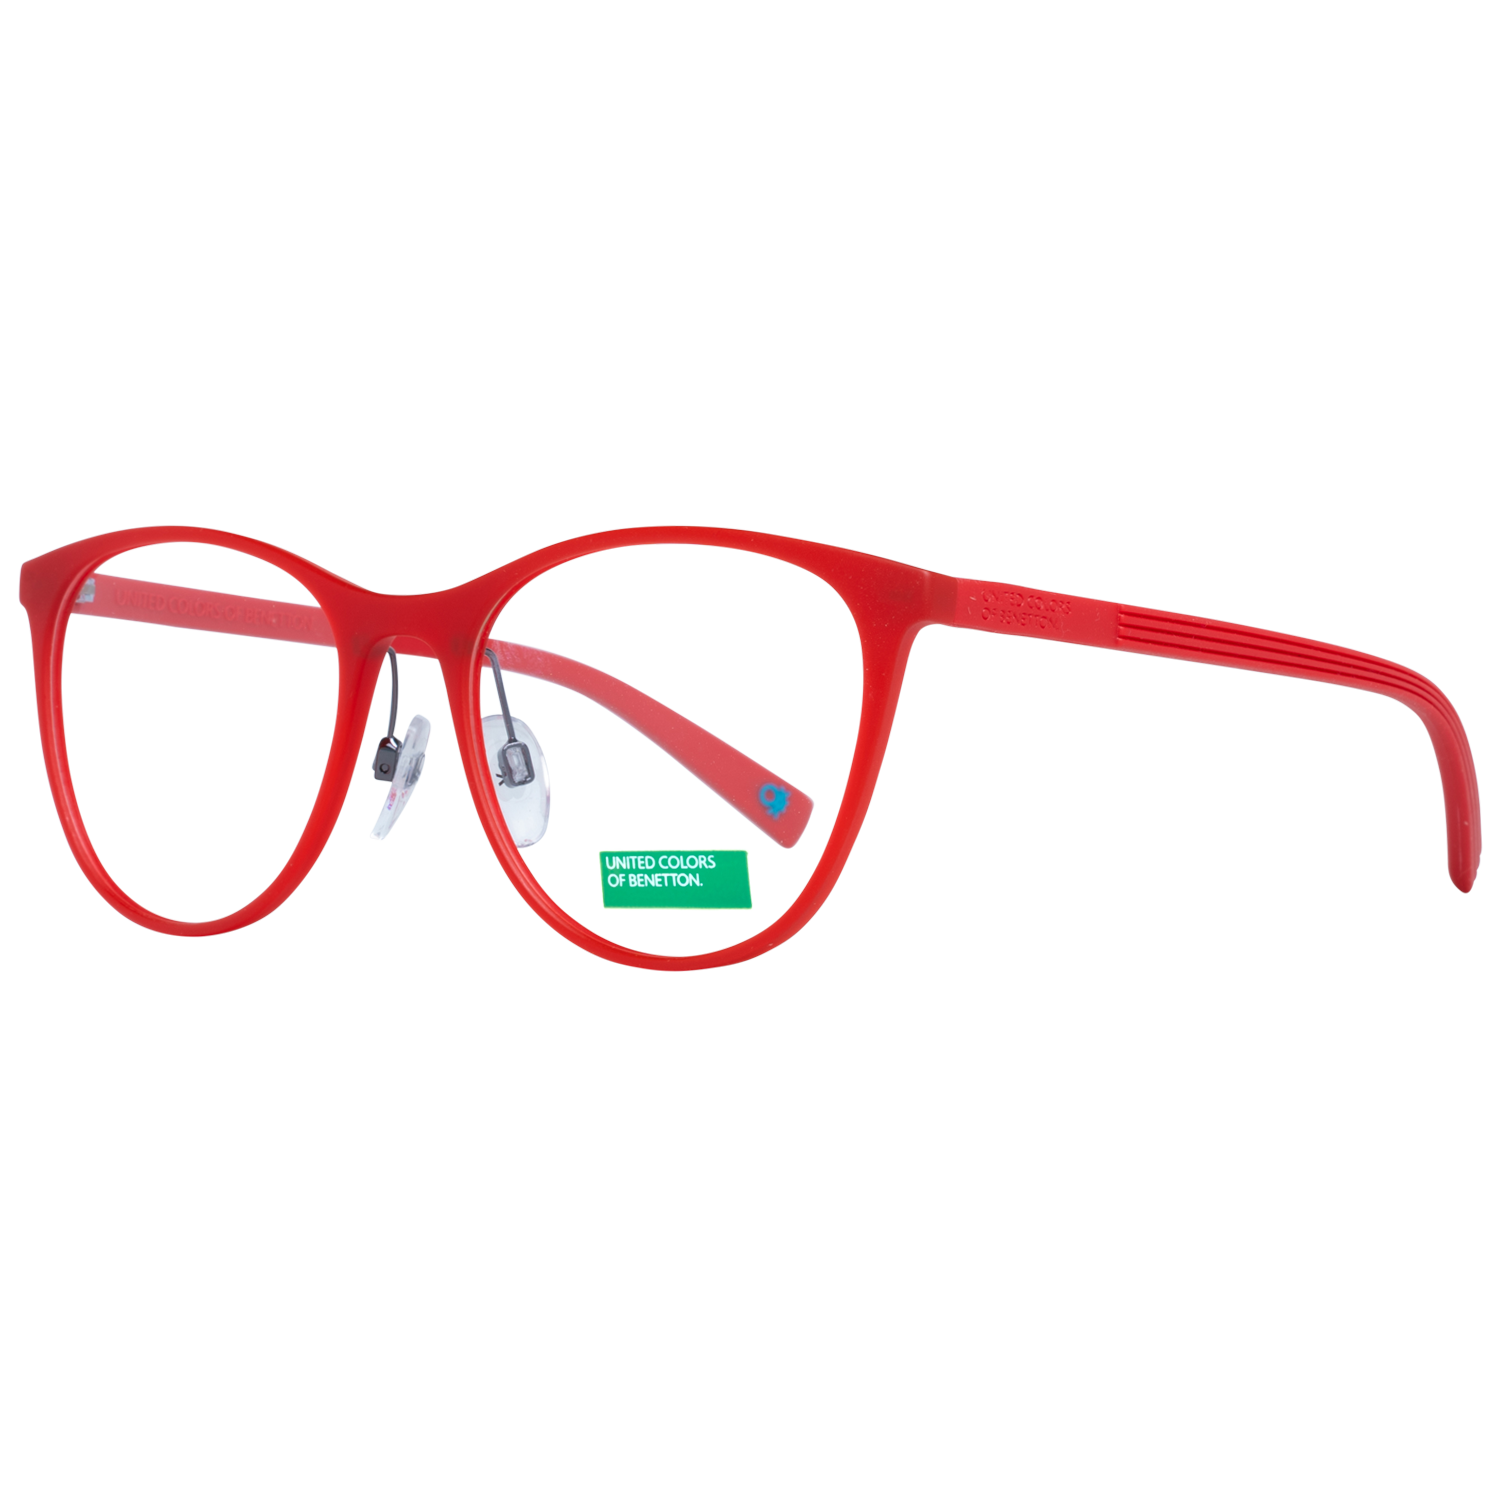 Benetton Frames Benetton Optical Frame BEO1012 277 51 Eyeglasses Eyewear UK USA Australia 